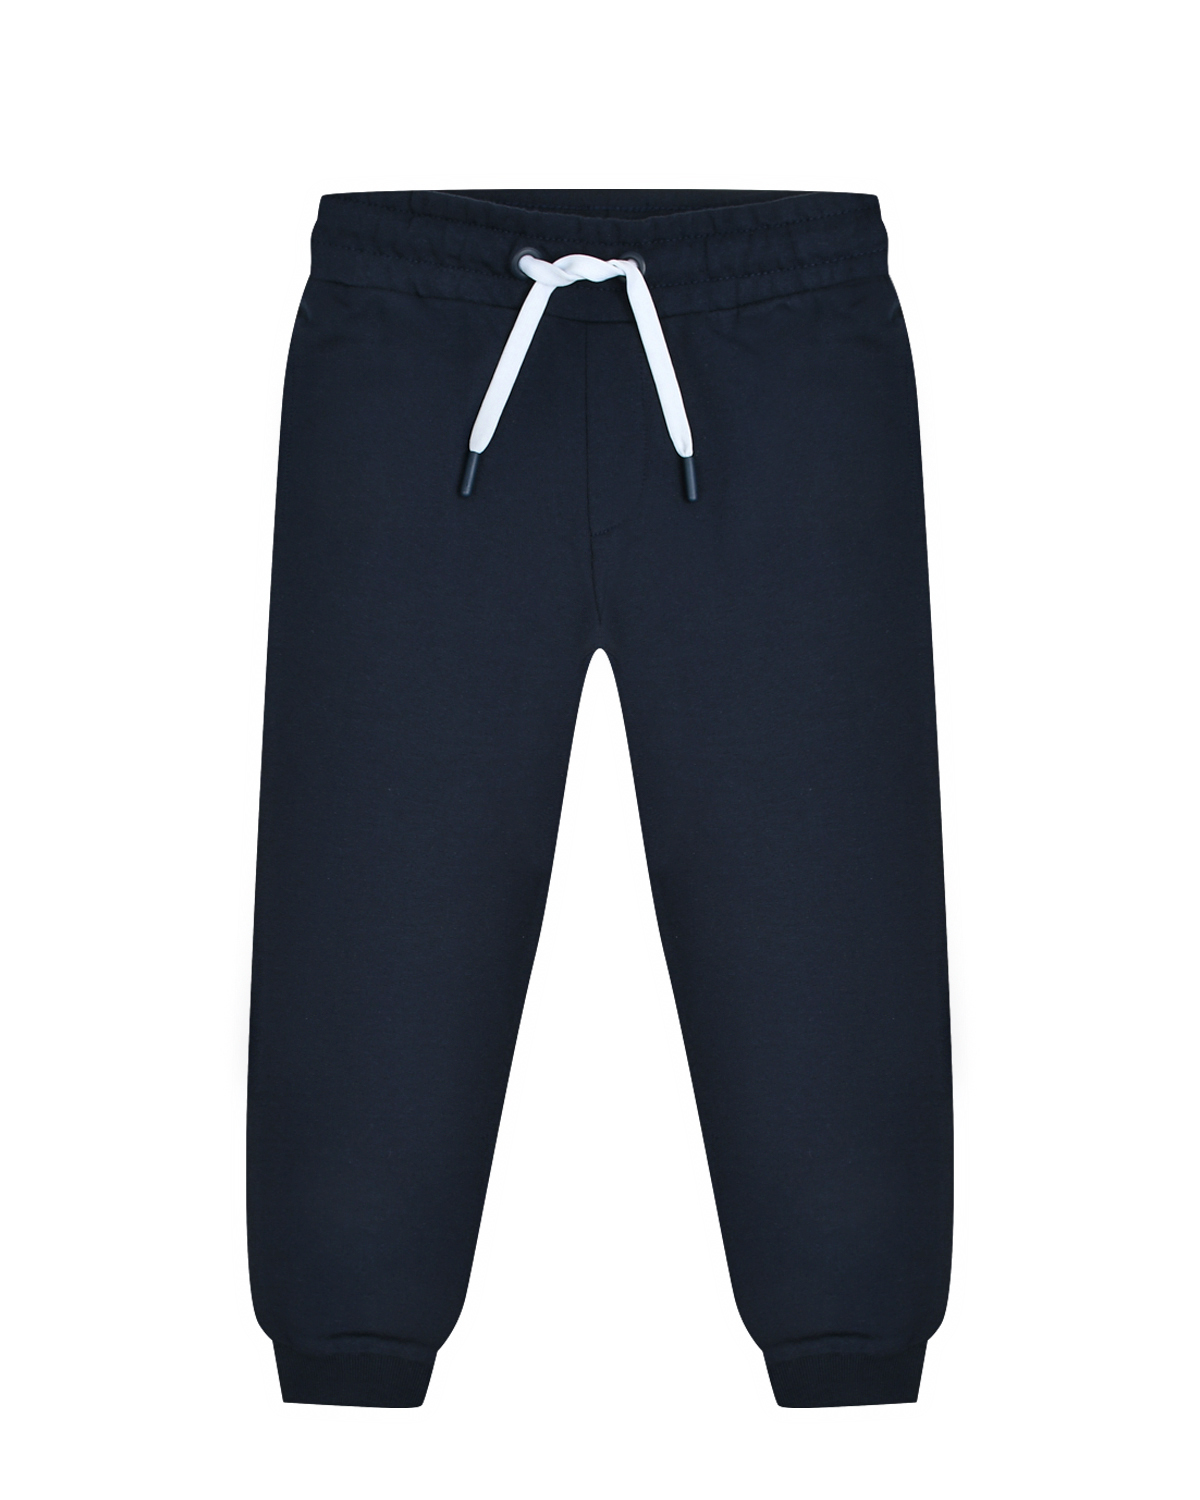 Спортивные брюки с поясом на кулиске Bikkembergs, размер 116, цвет синий - фото 1